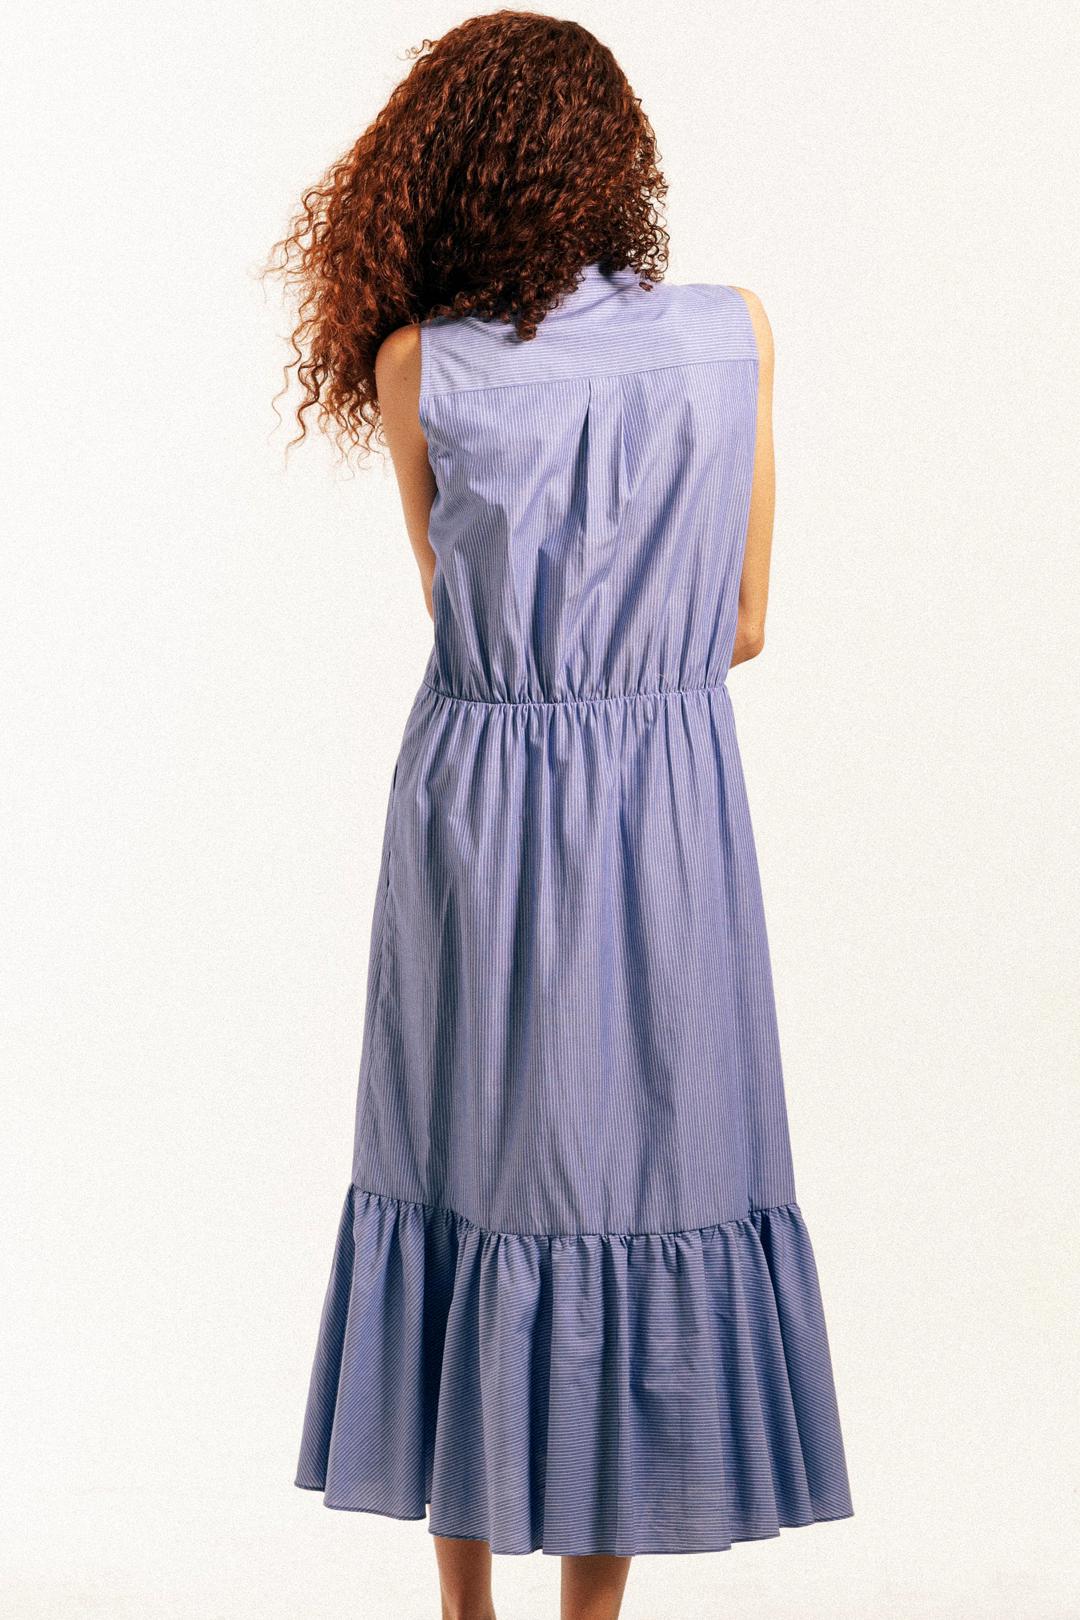 BLAKE Midi Dress - French Blue/White Stripe